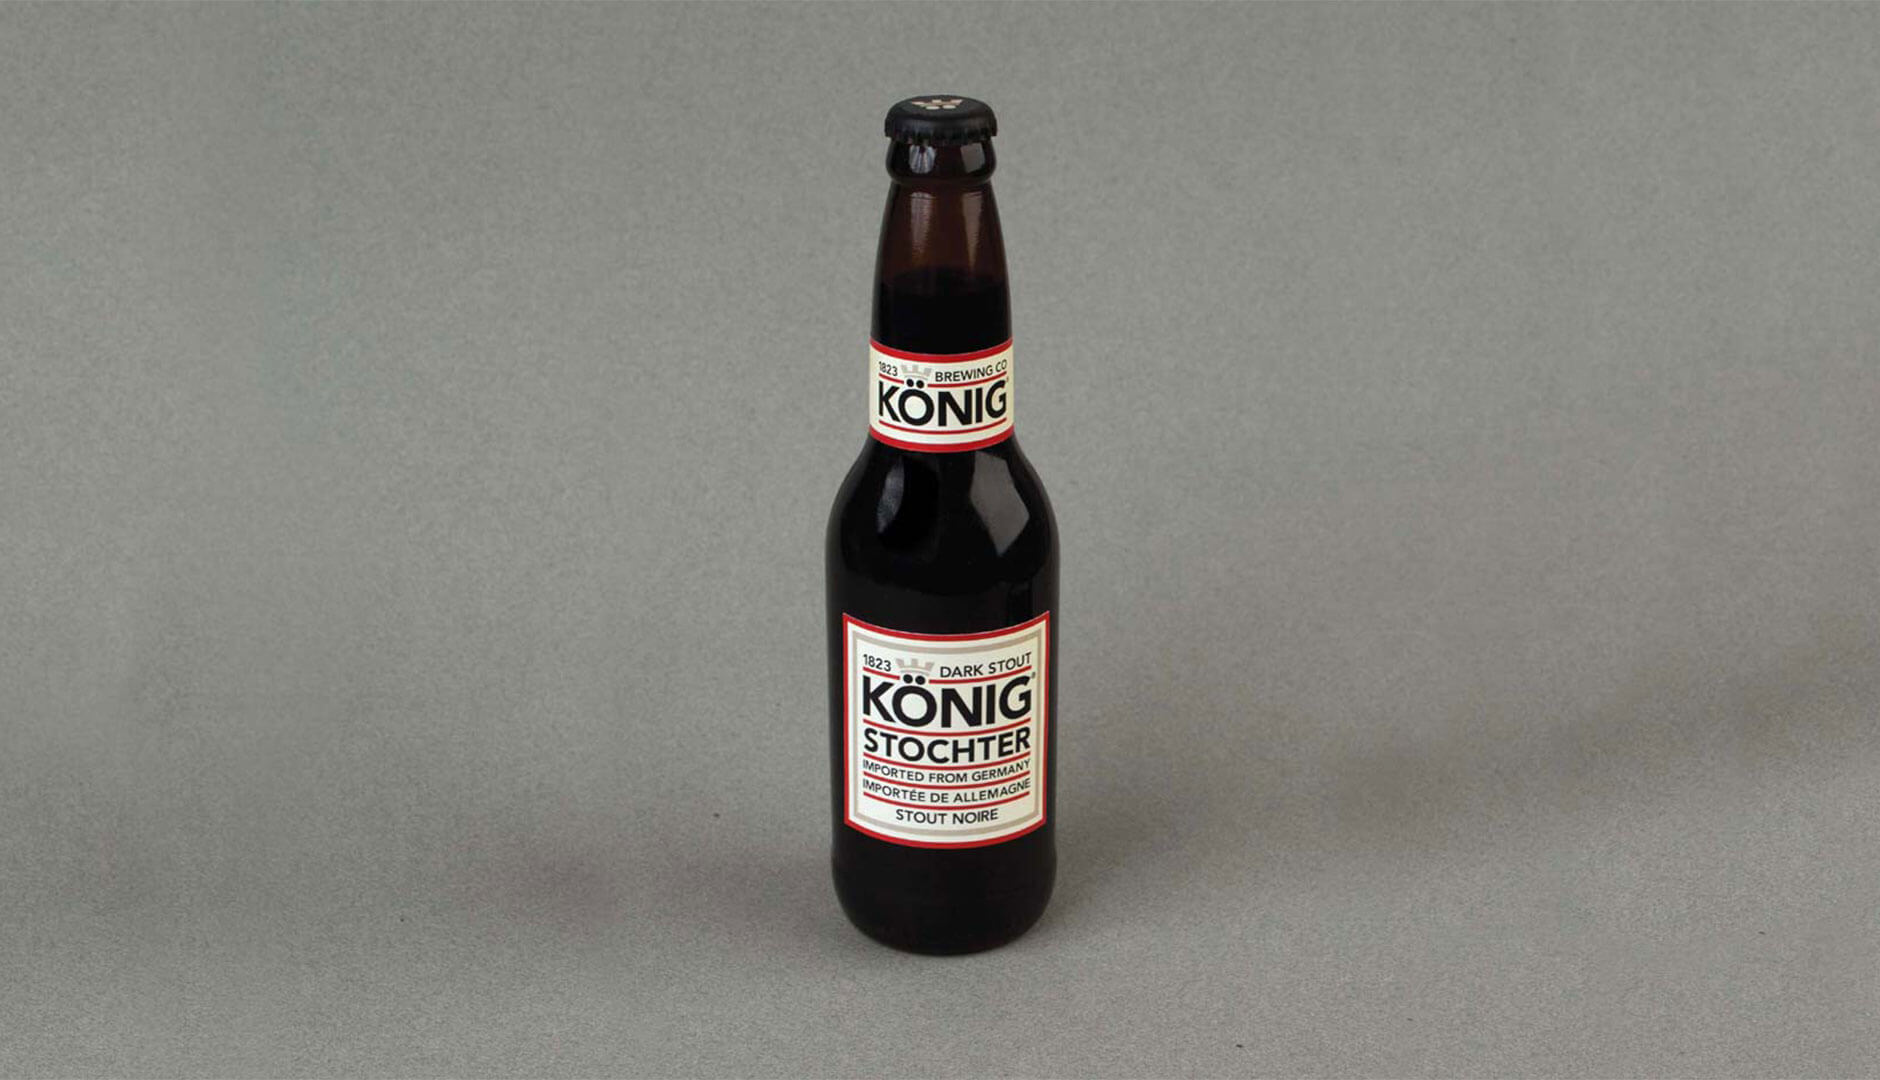 Königstochter Beer Branding Image 1